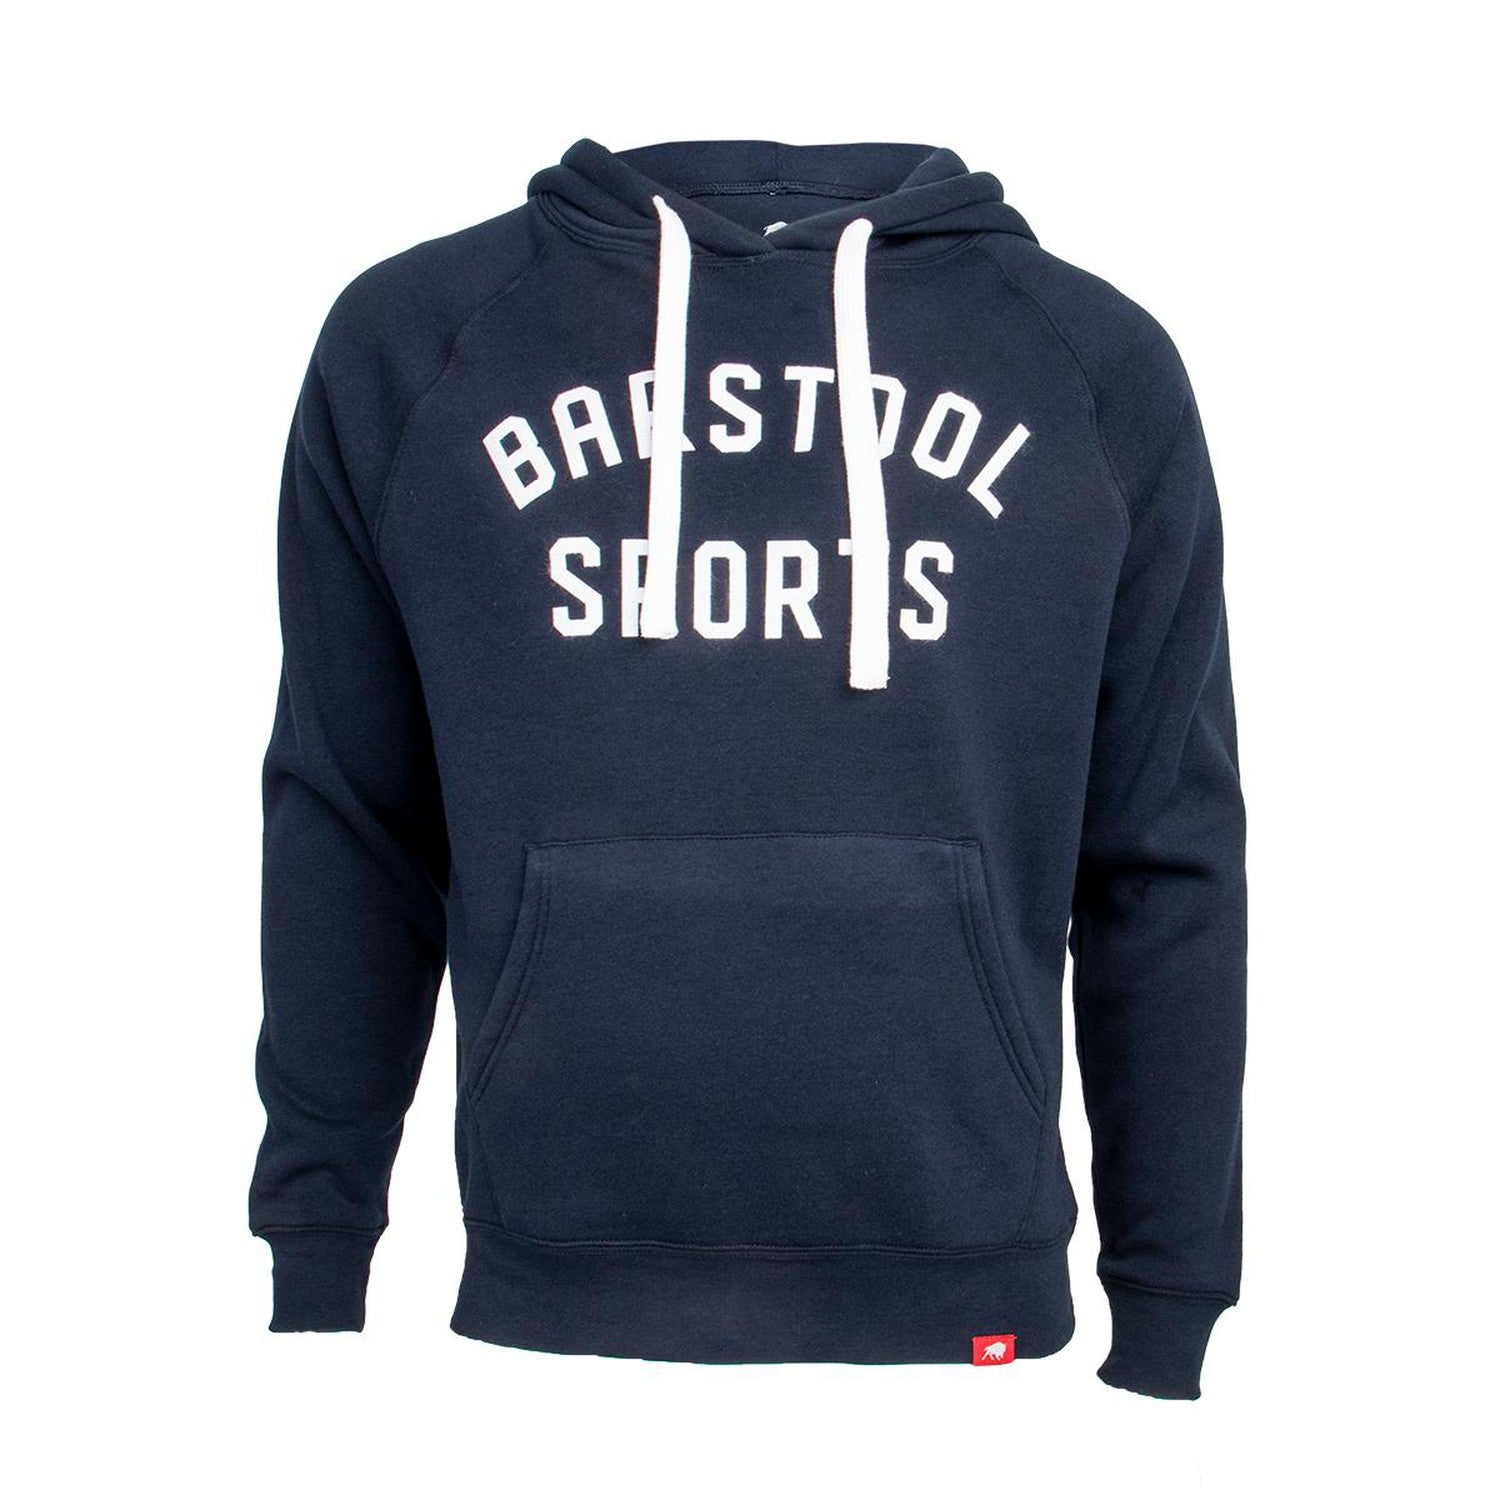 Barstool Sportiqe Applique Olsen Hoodie-Hoodies & Sweatshirts-Barstool Sports-Navy-S-Barstool Sports